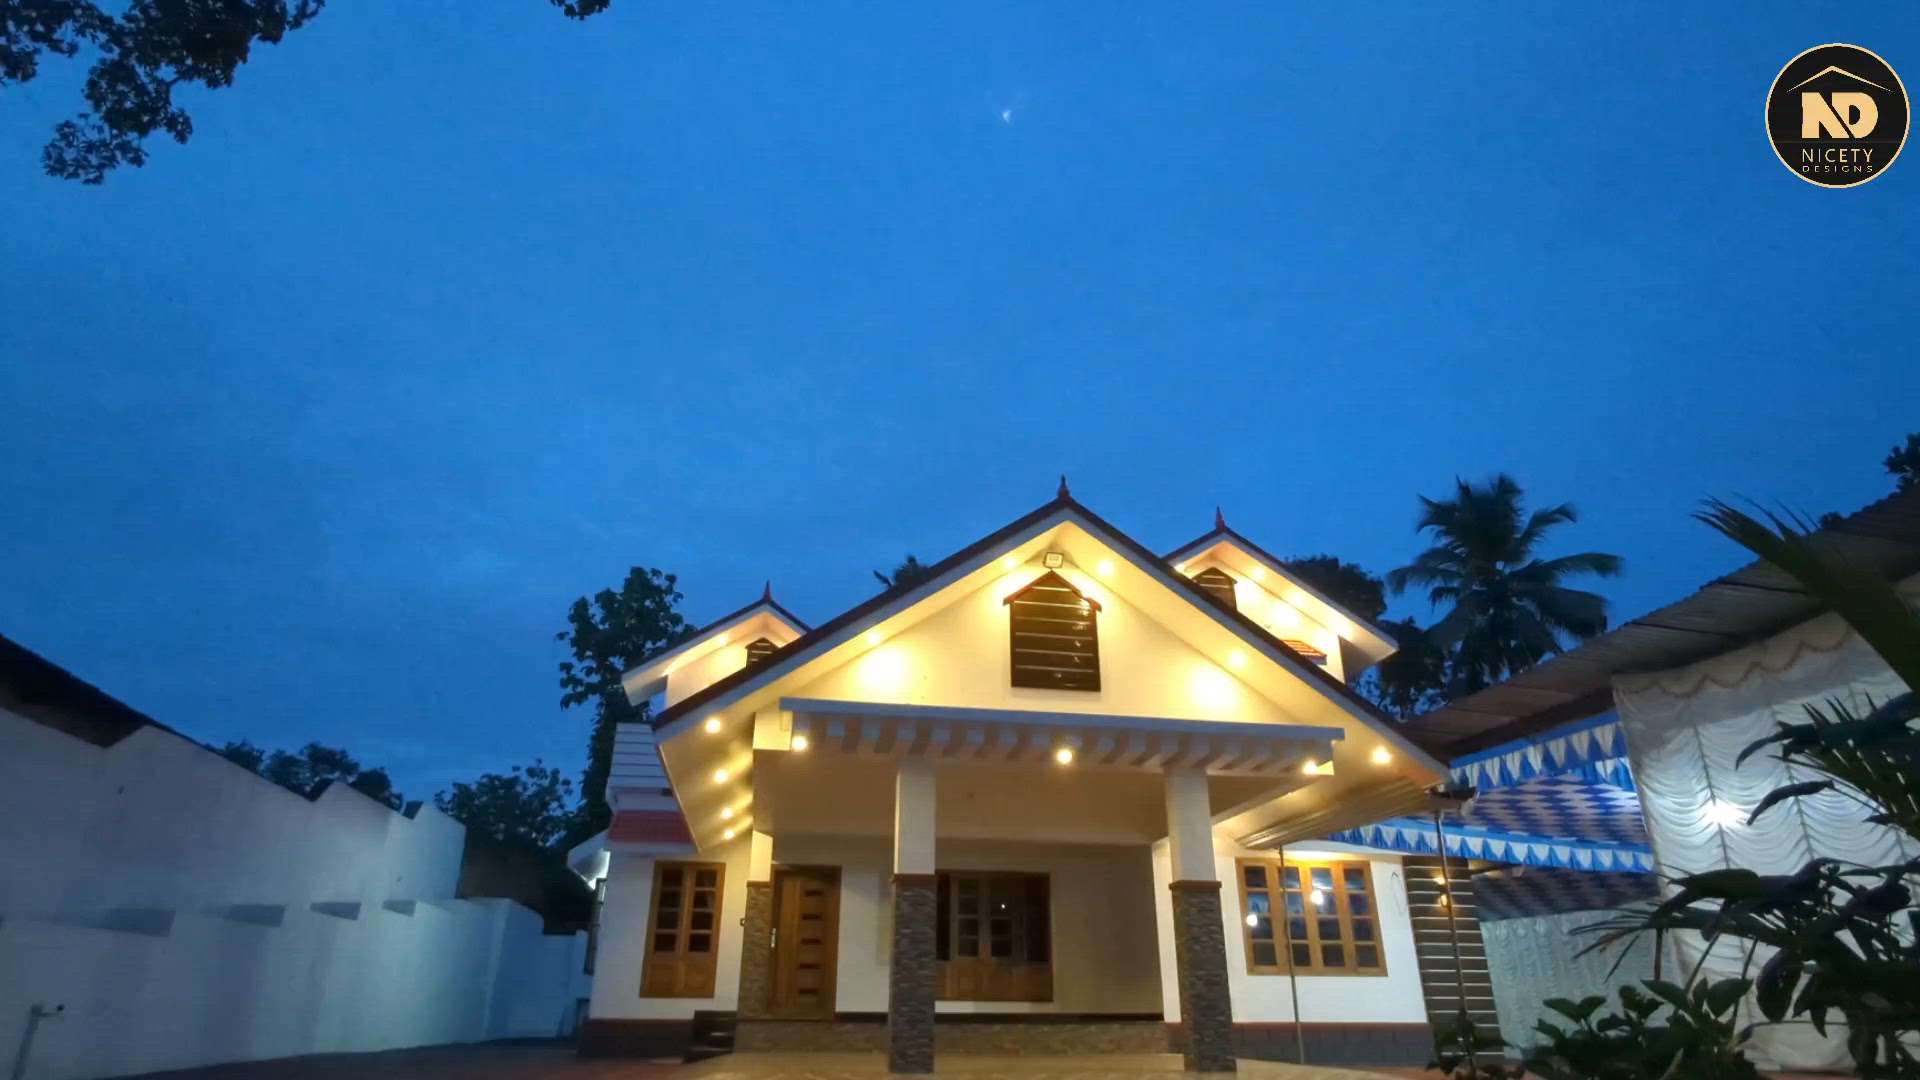 Housewarming
New Work completed  #KeralaStyleHouse  #moderndesign  #exteriordesigns